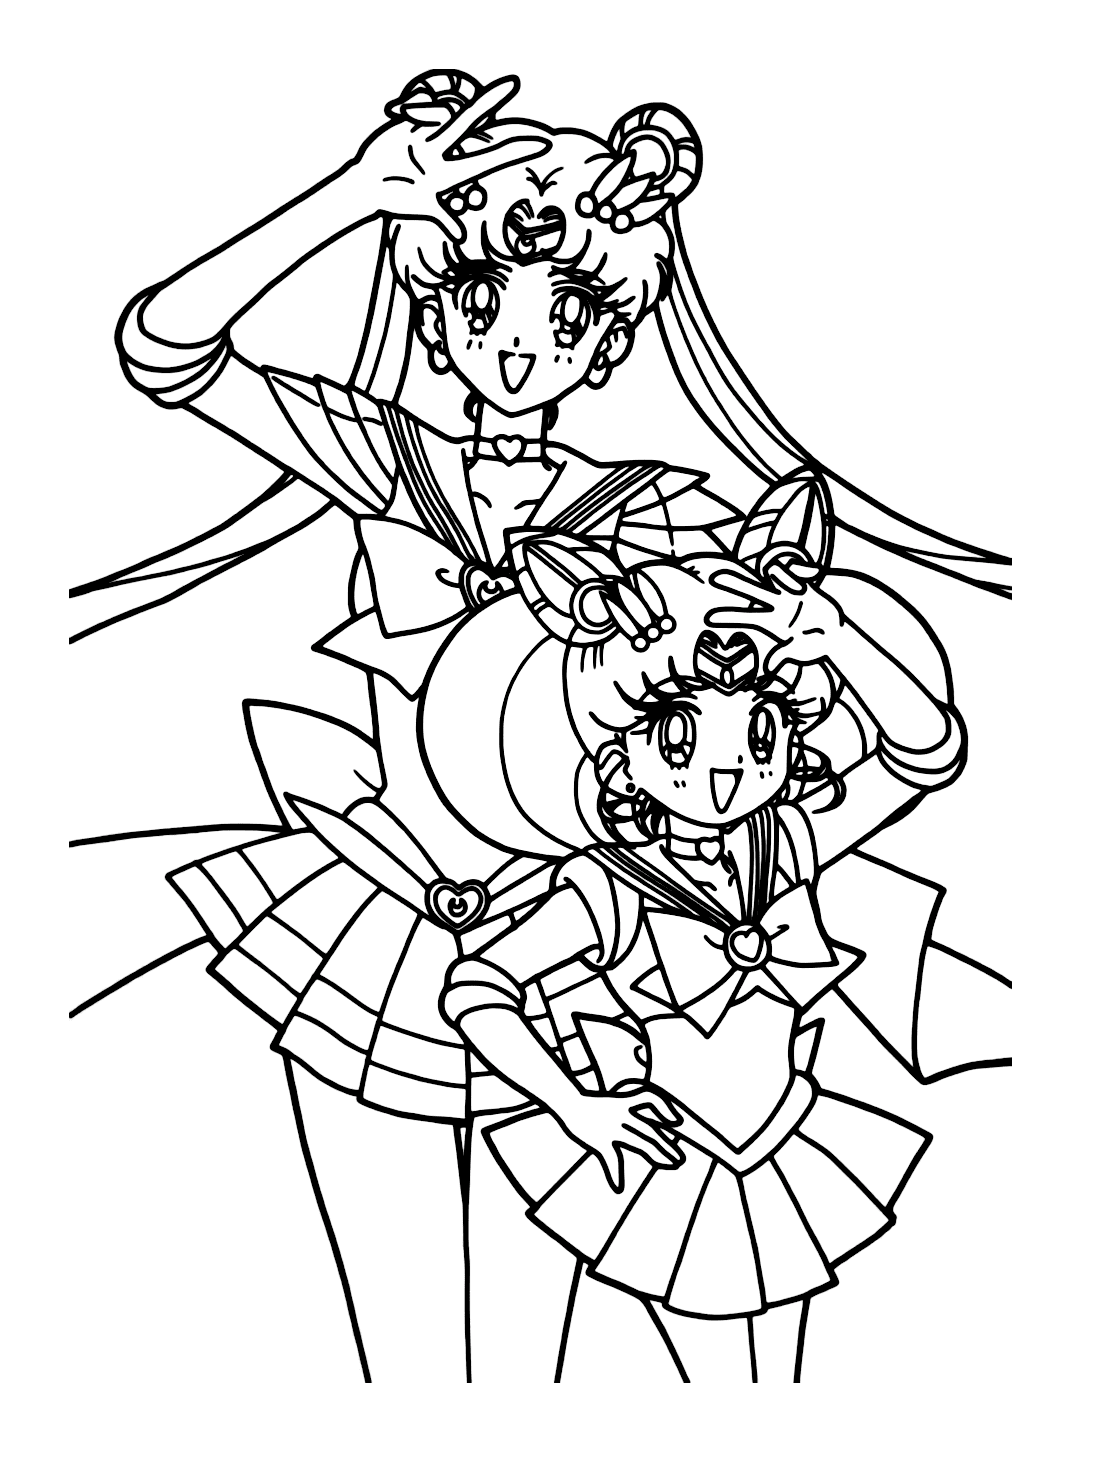 Chibi Sailor Moon Drawing Coloring Pages